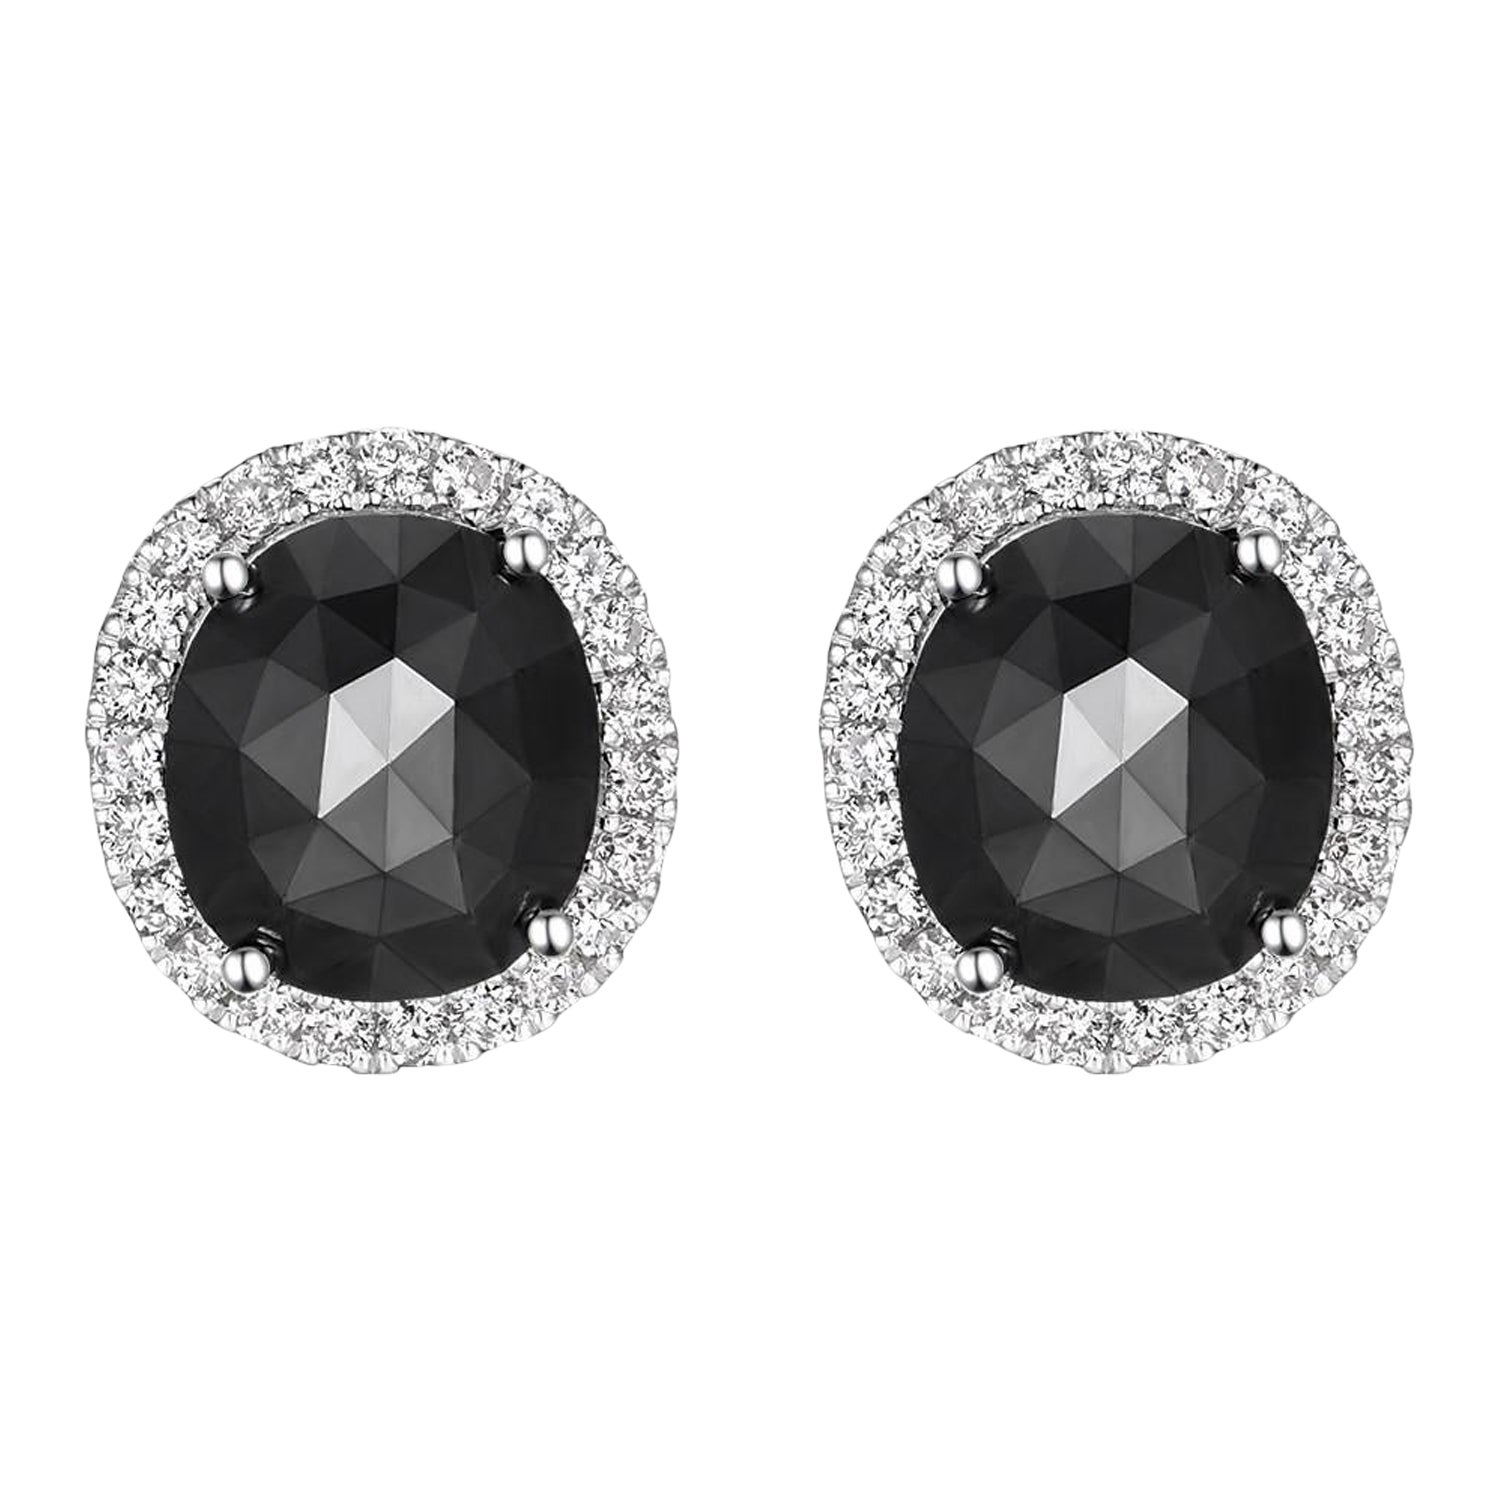 2.29 Carat Rose Cut Black Diamond Stud Earring in 14K White Gold For Sale